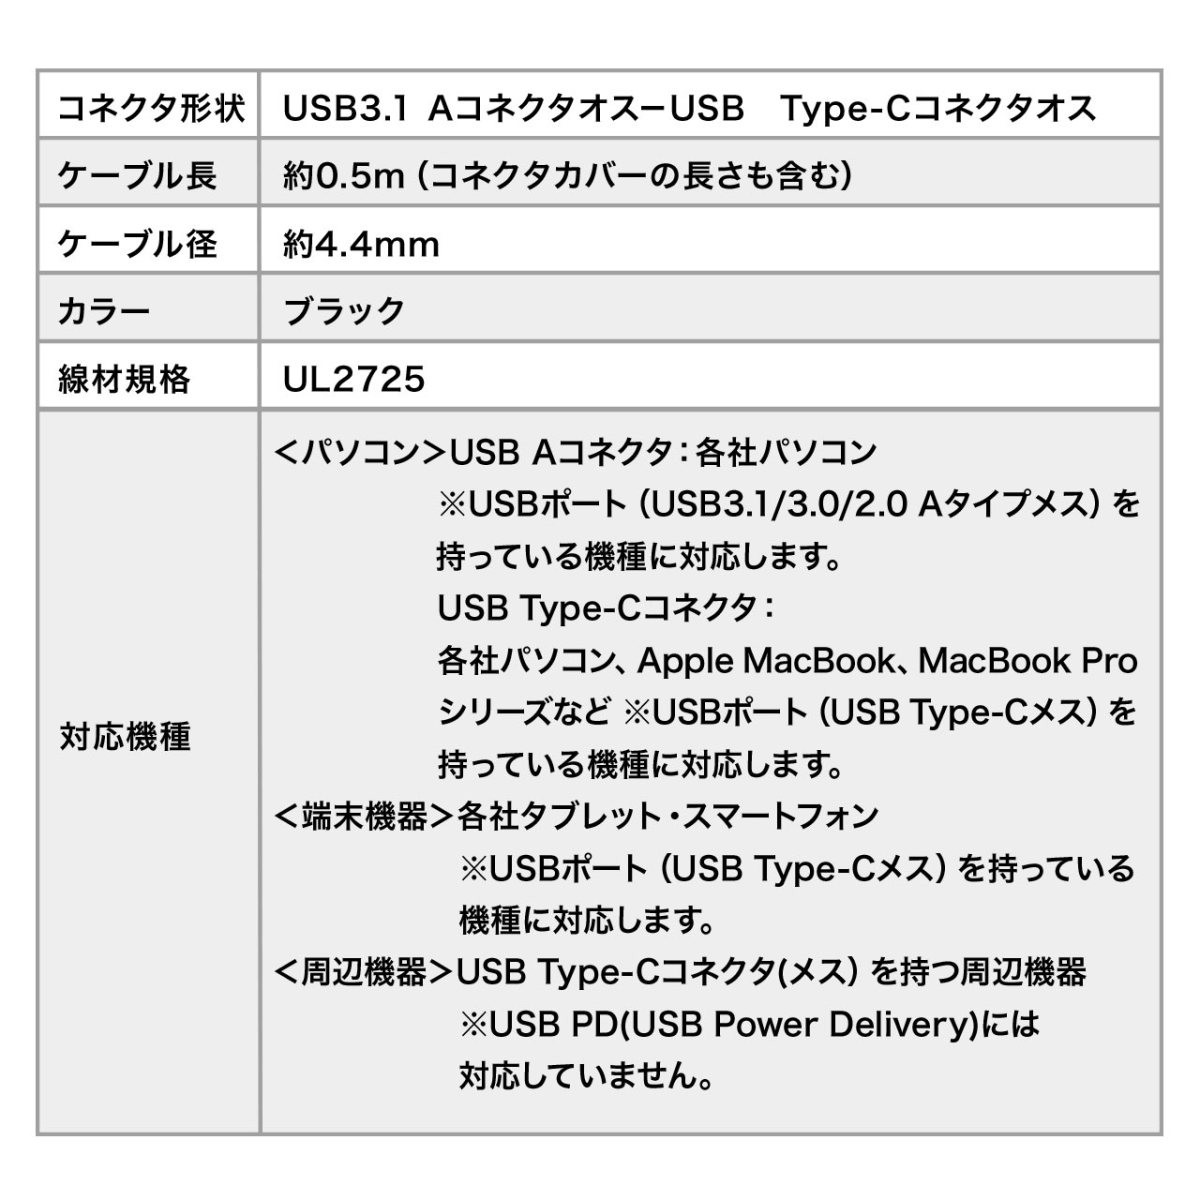 Type-C USB ケーブル USB TypeC ケーブル タイプc 充電ケーブル 50cm